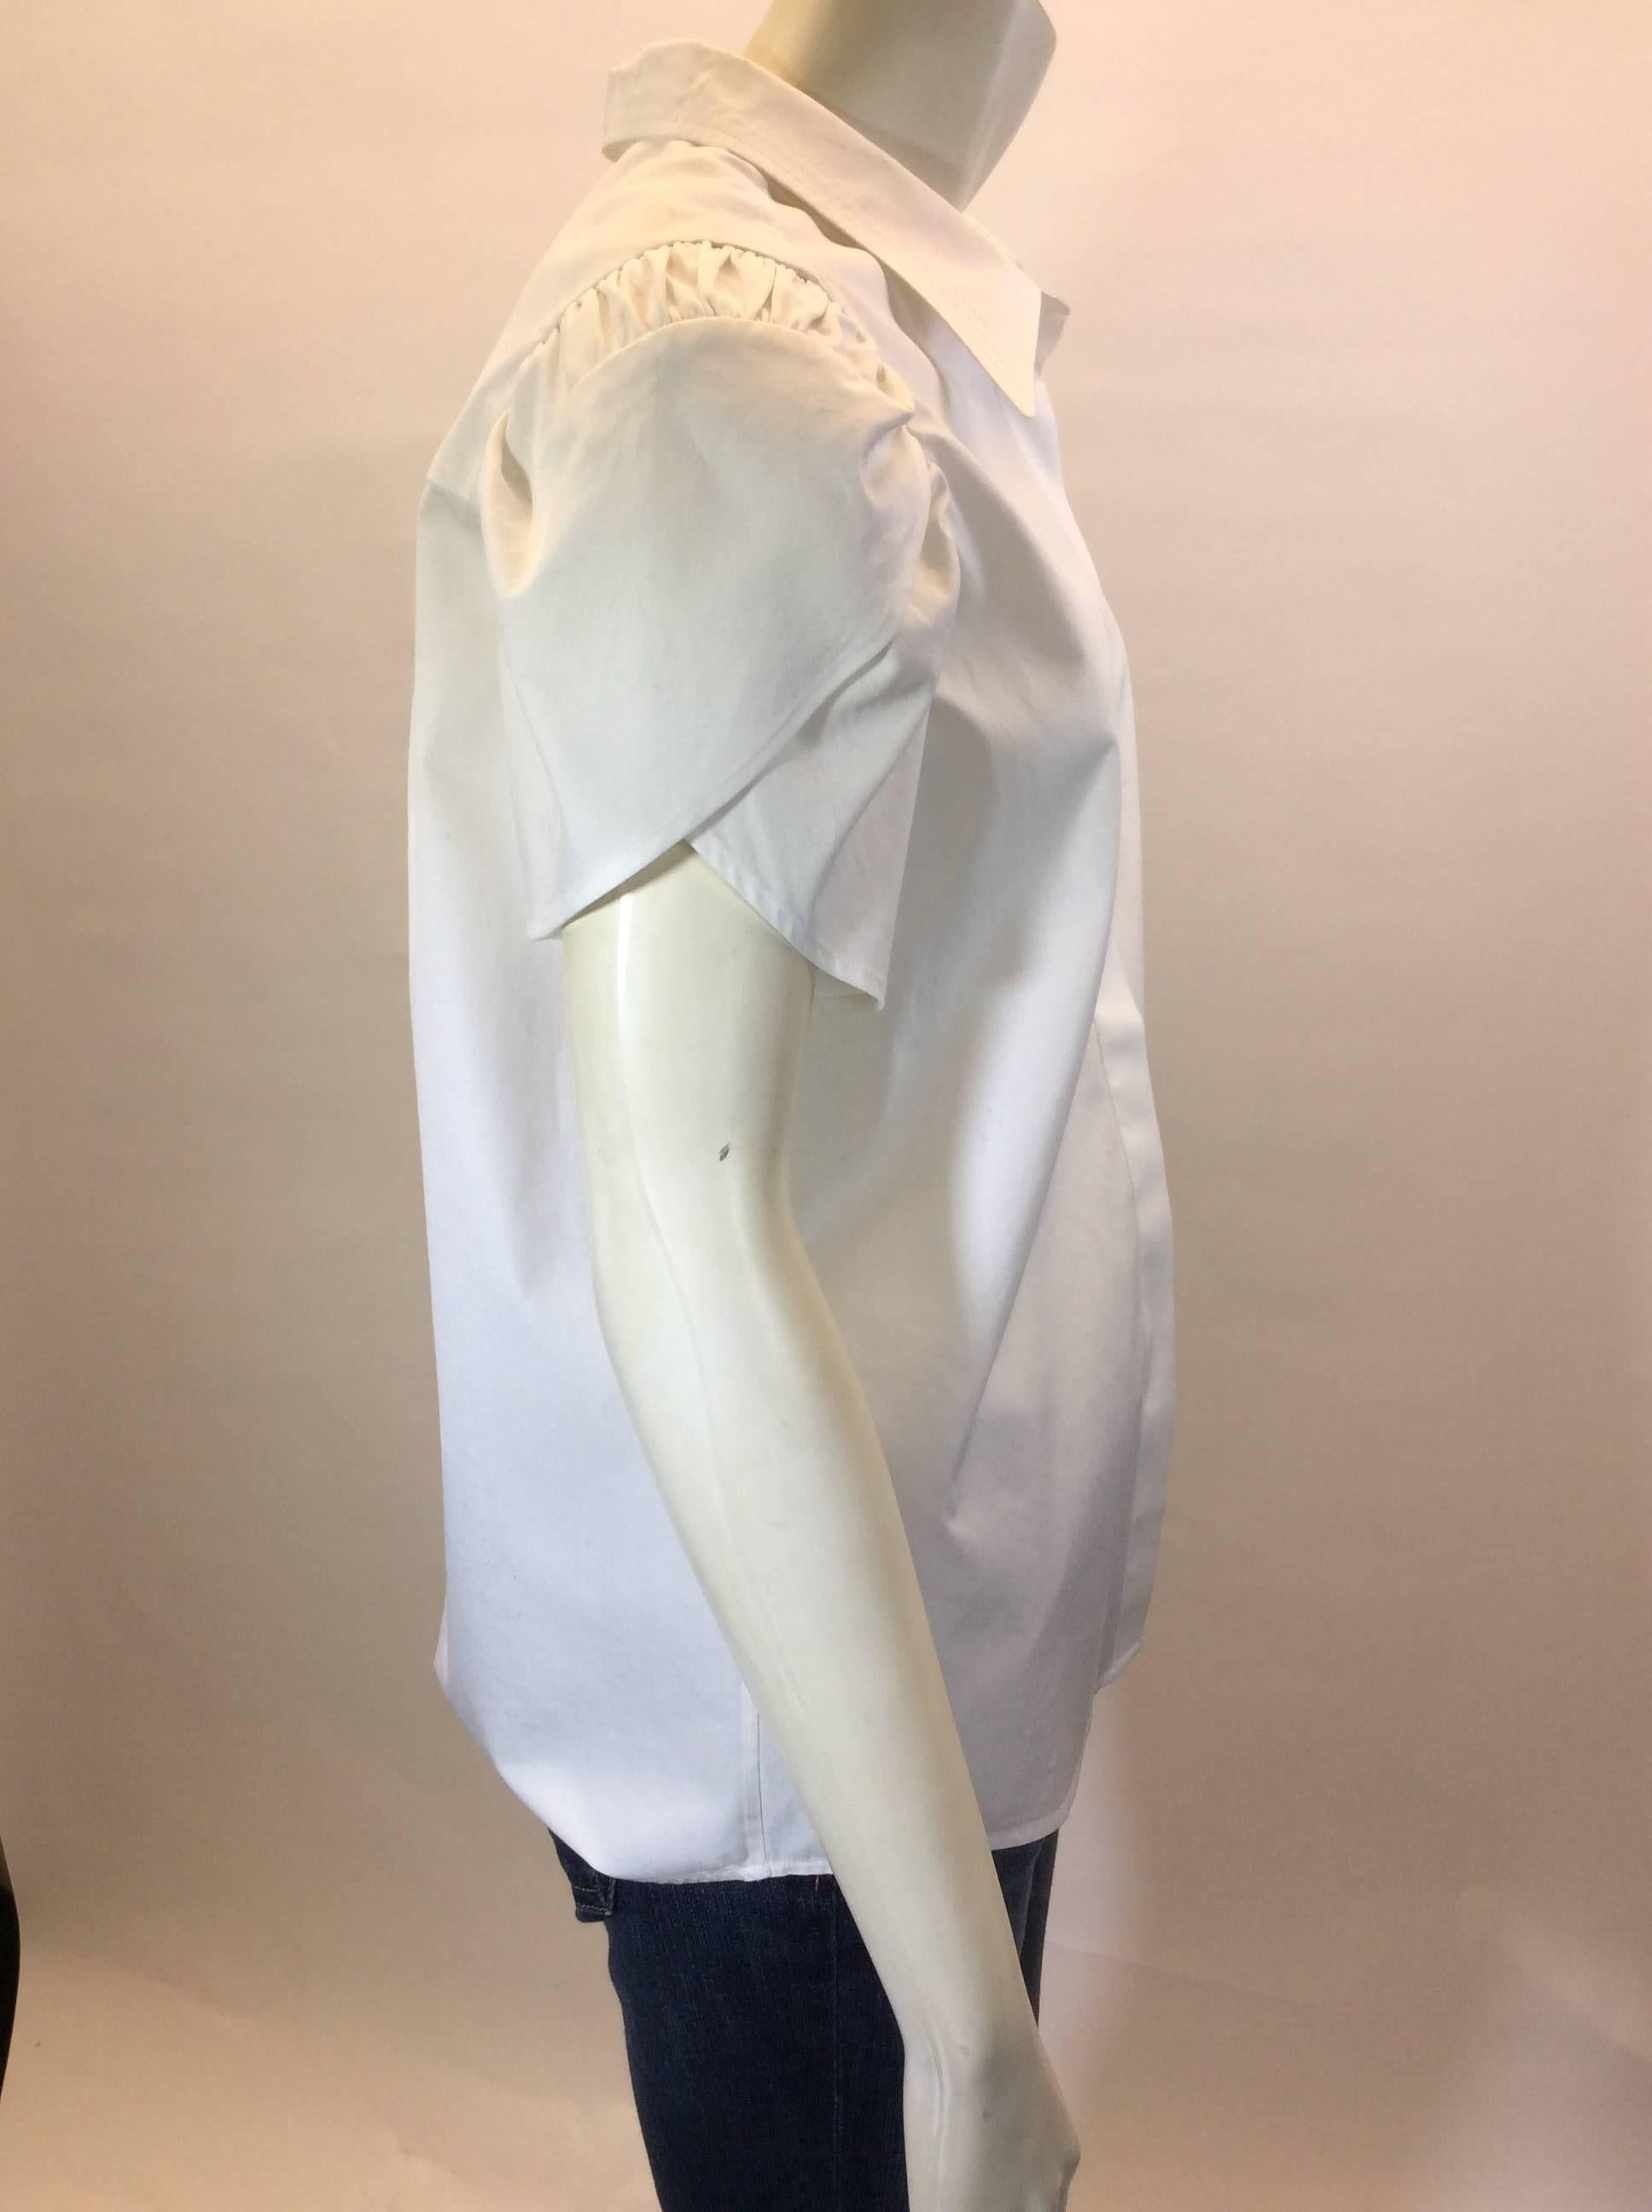 Yves Saint Laurent White Buttondown 
Size Large, 100% cotton
Short Sleeve, layered